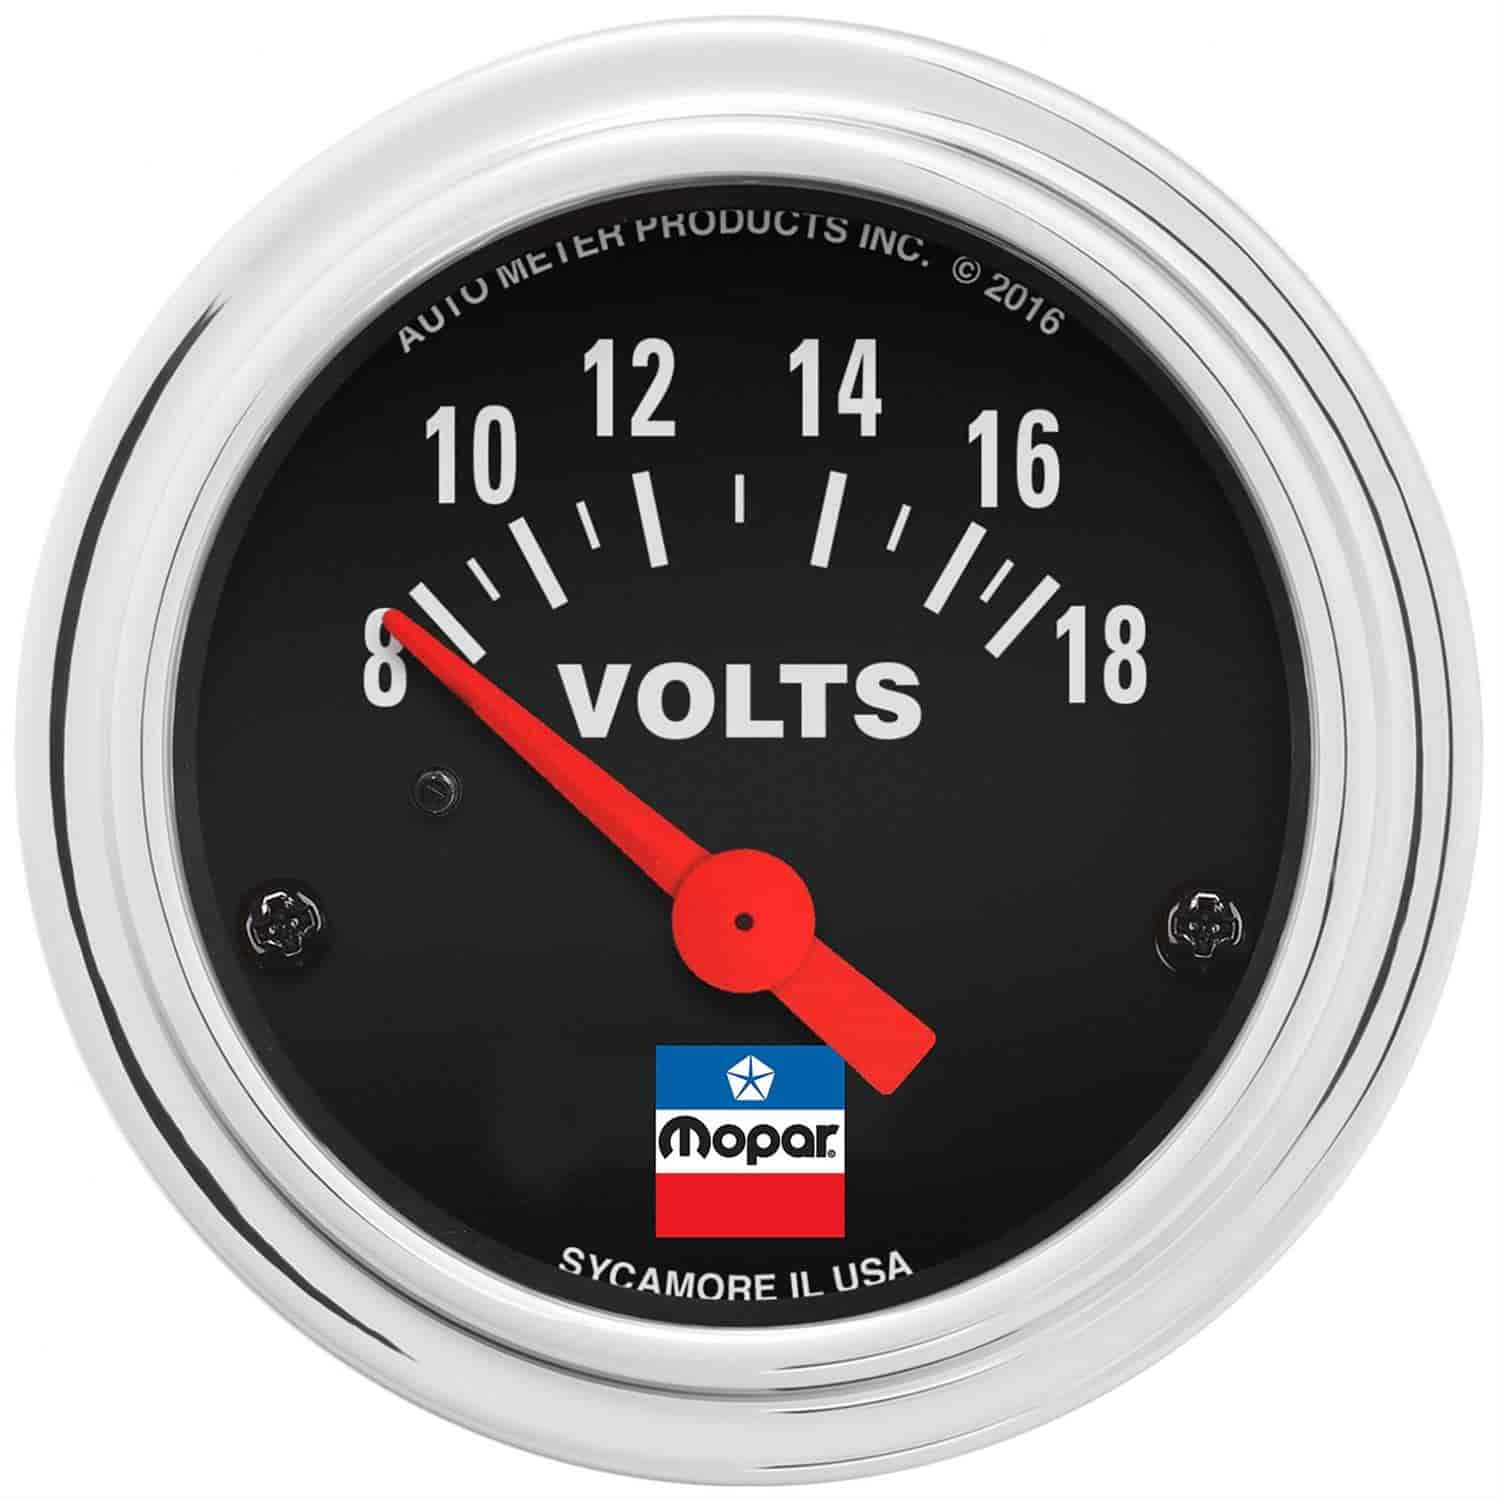 Officially-Licensed Mopar Classic Voltmeter Gauge 2 1/16 in. Electrical (Short Sweep) - 8-18 Volts